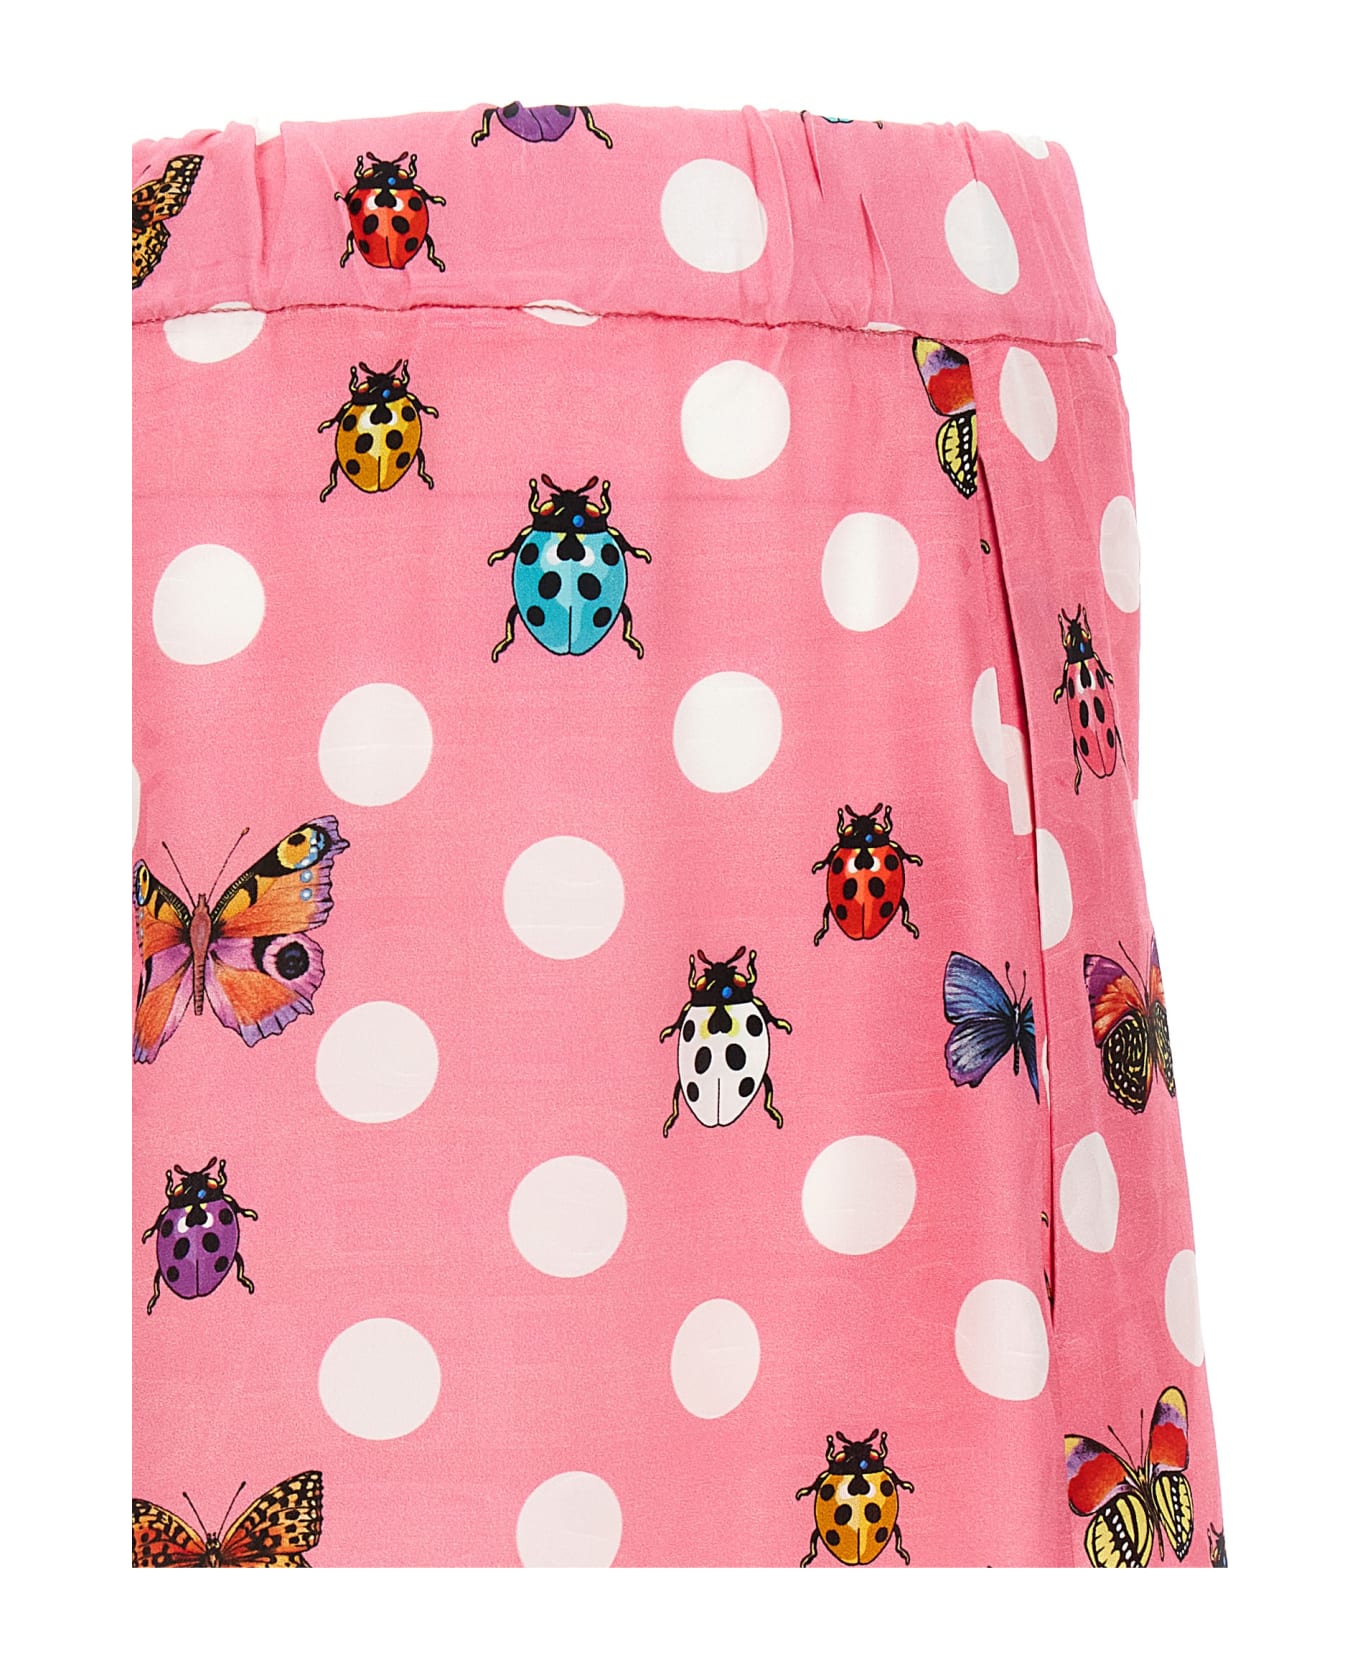 Versace 'heritage Butterflies & Ladybugs Polka Dot' Capsule Shorts - Pink